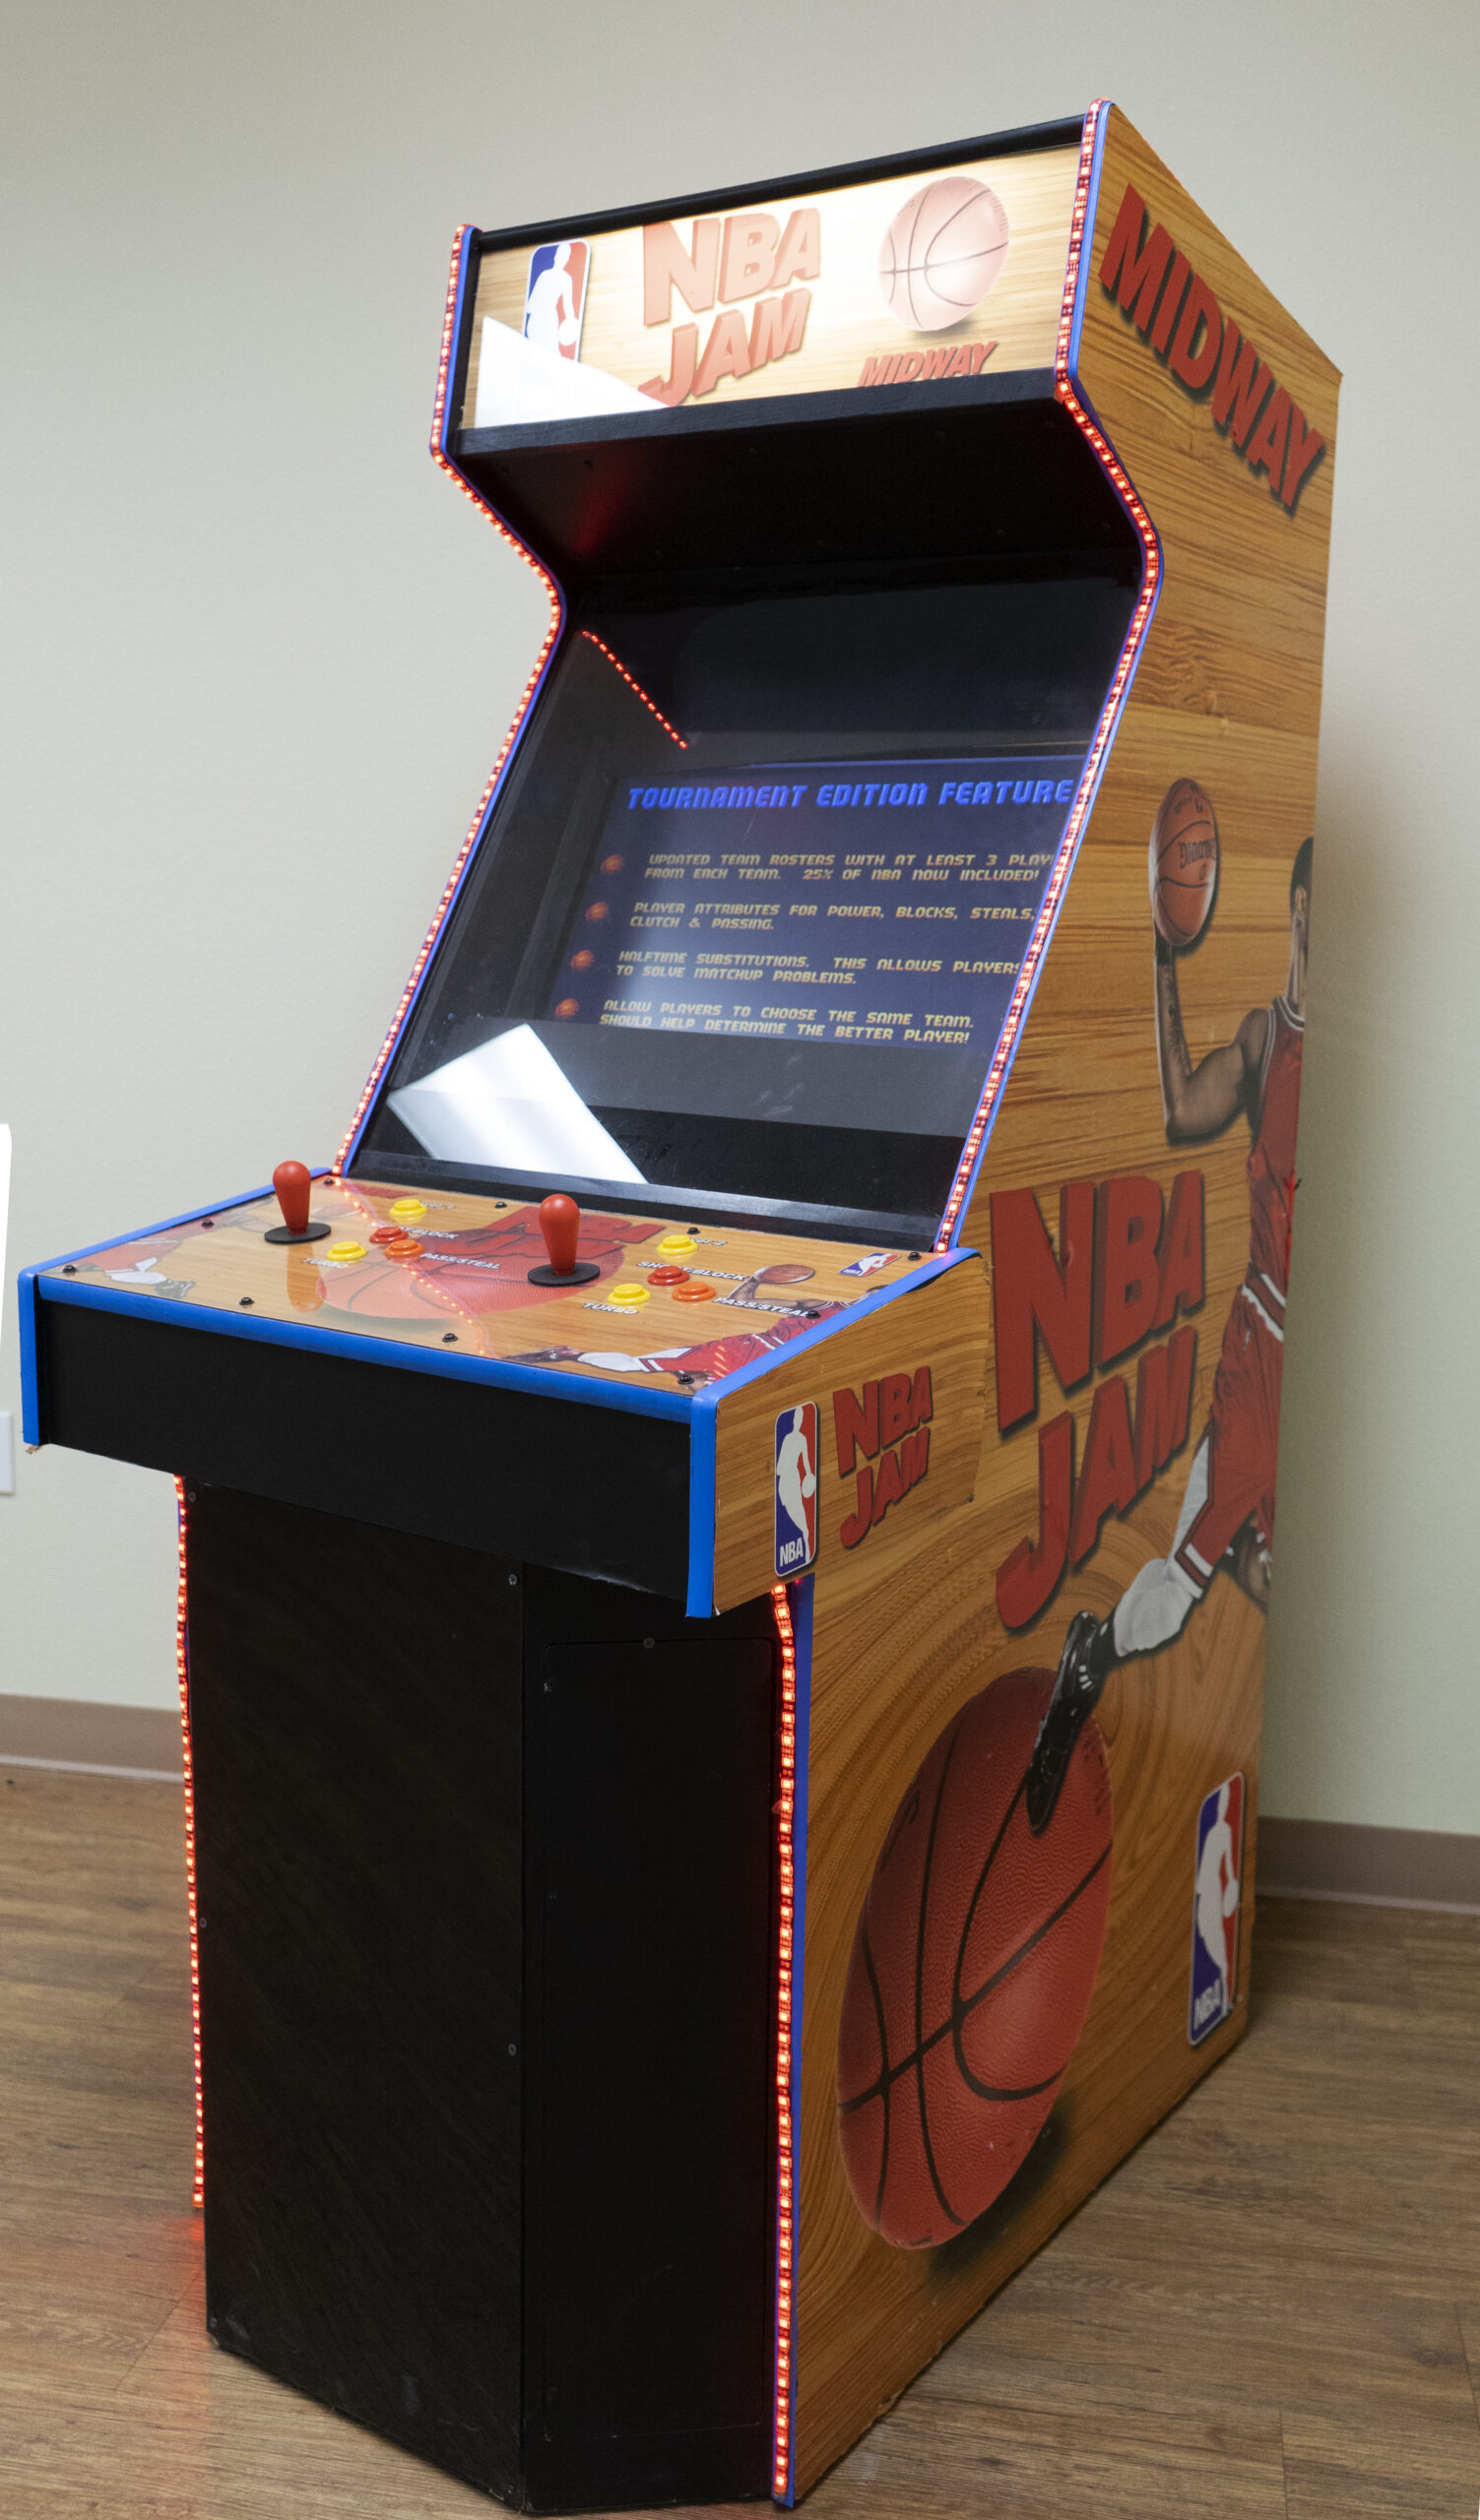 NBA Jam Arcade Game